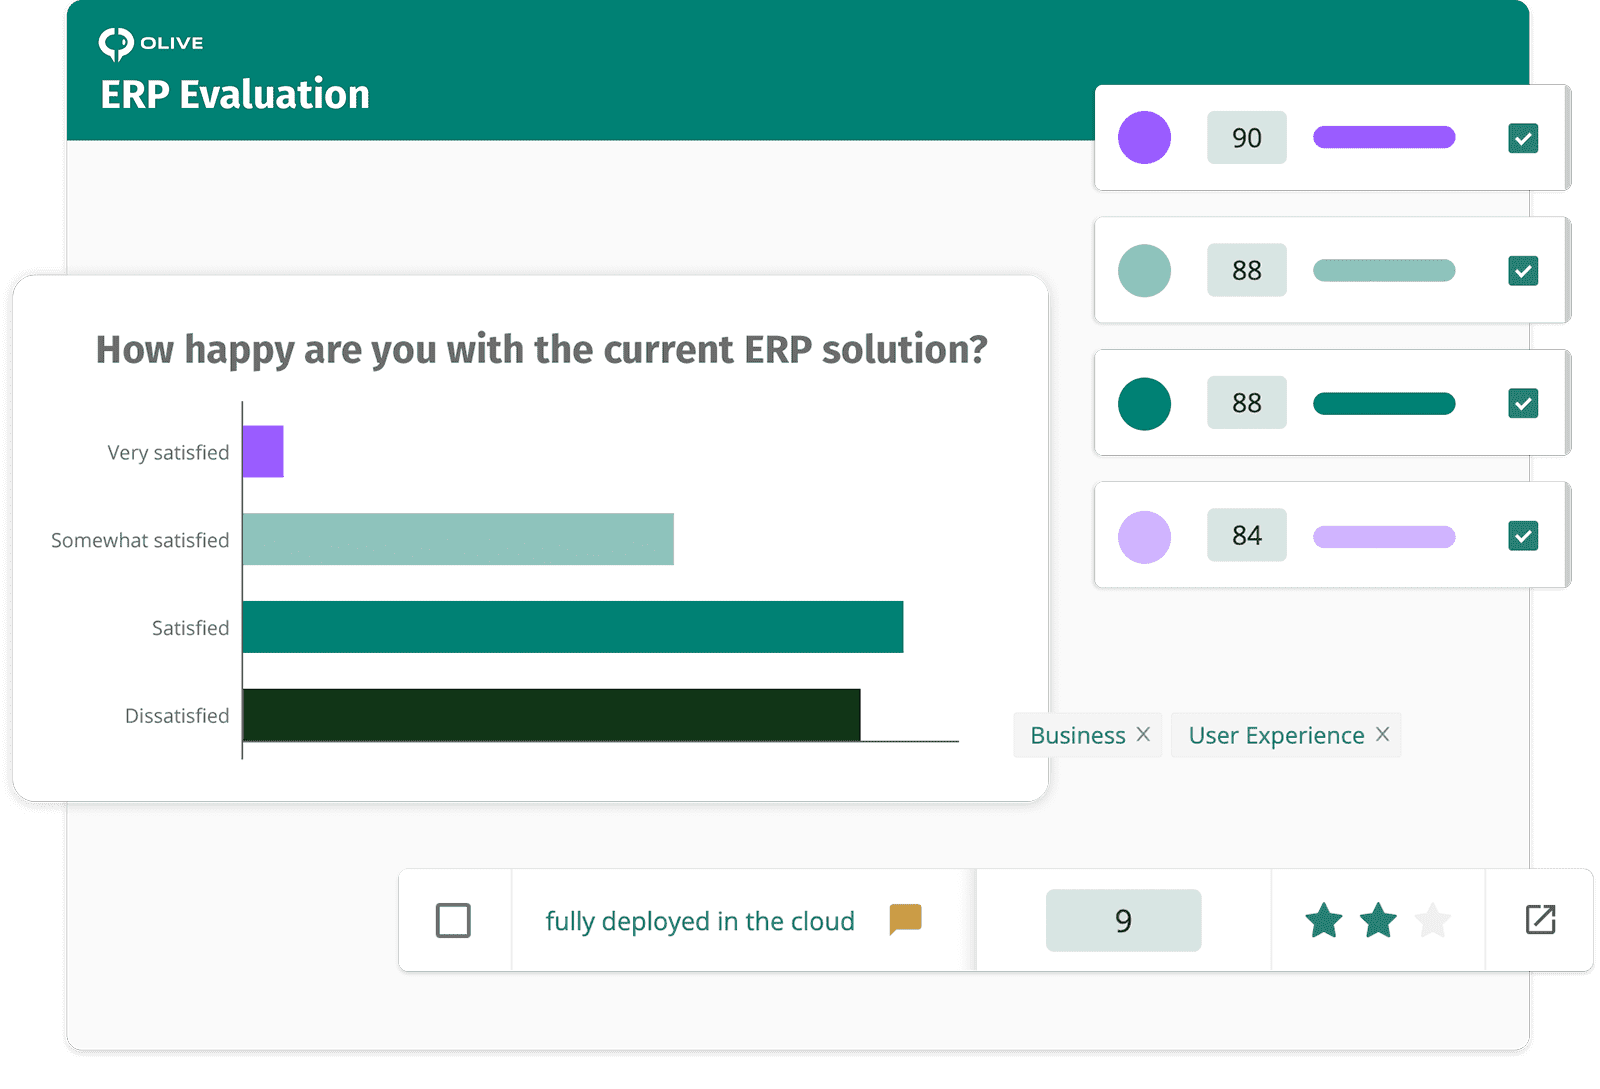 ERP Comparison Survey in Olive